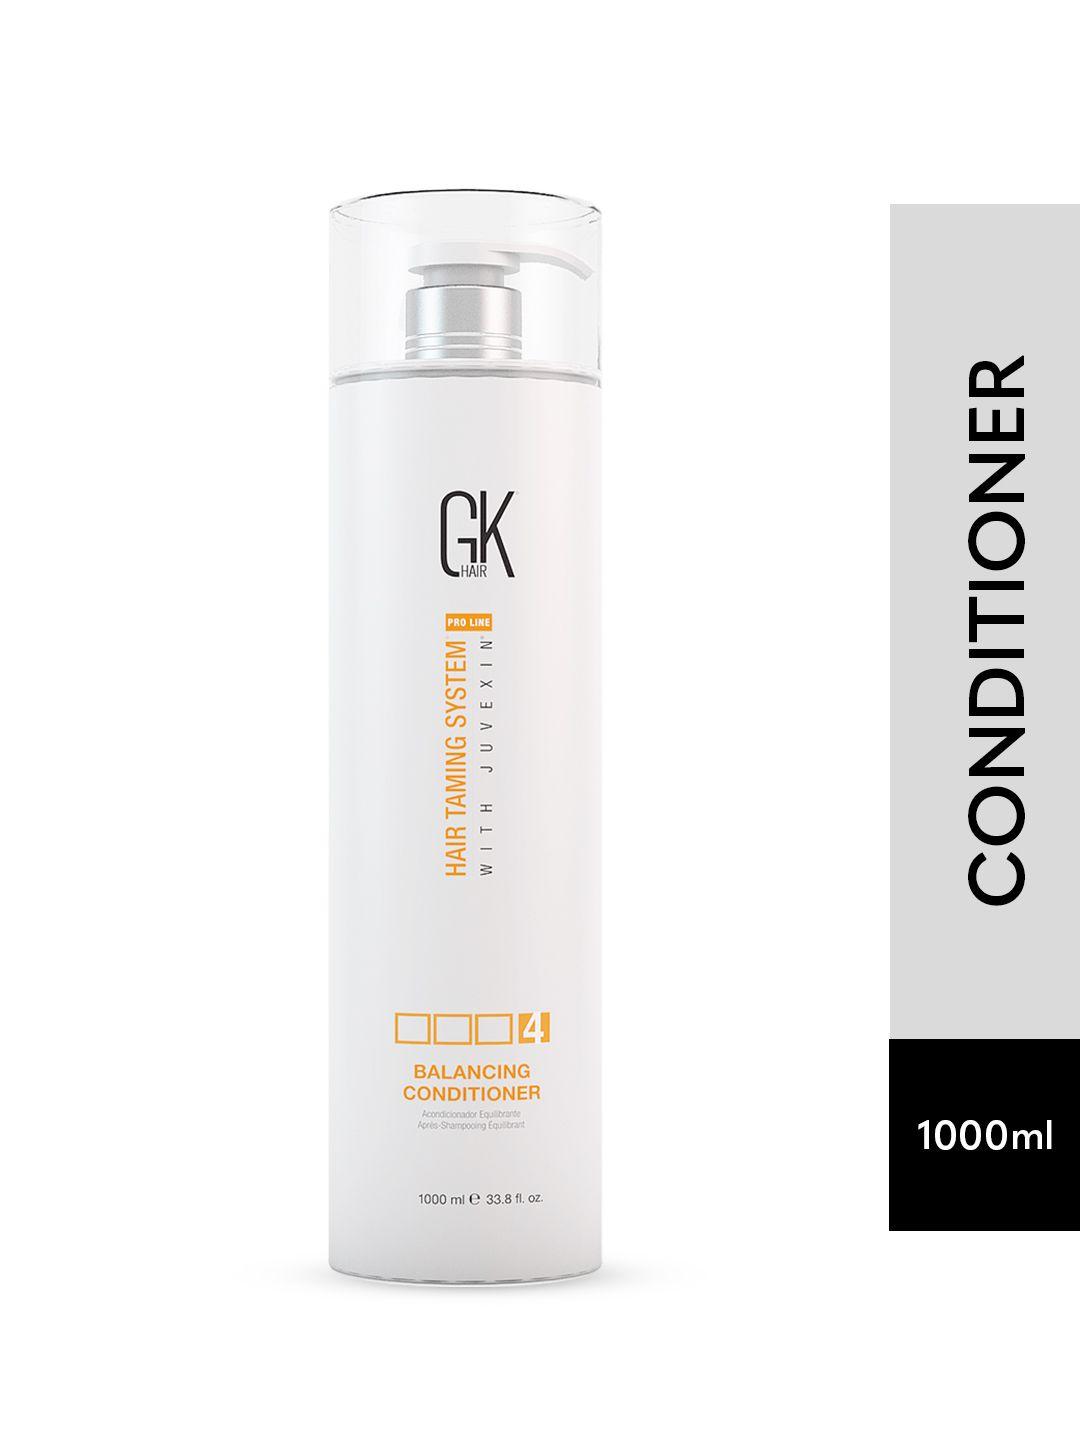 gk hair balancing global keratin oil control conditioner-1000 ml